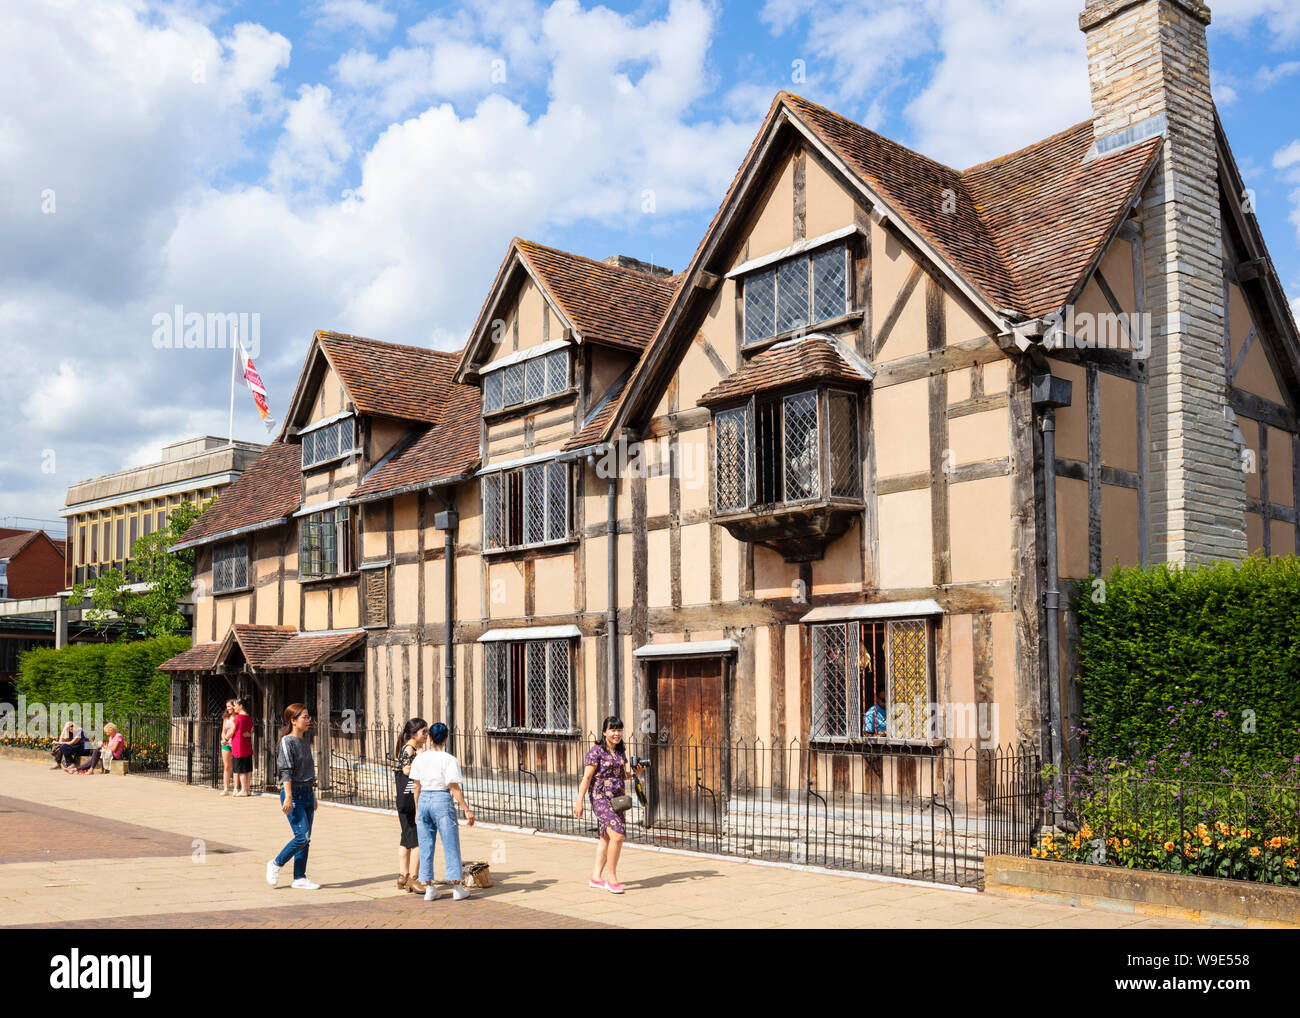 Stratford-upon-Avon William Shakespeare's birthplace Stratford upon Avon Warwickshire England UK GB Europe Stock Photo